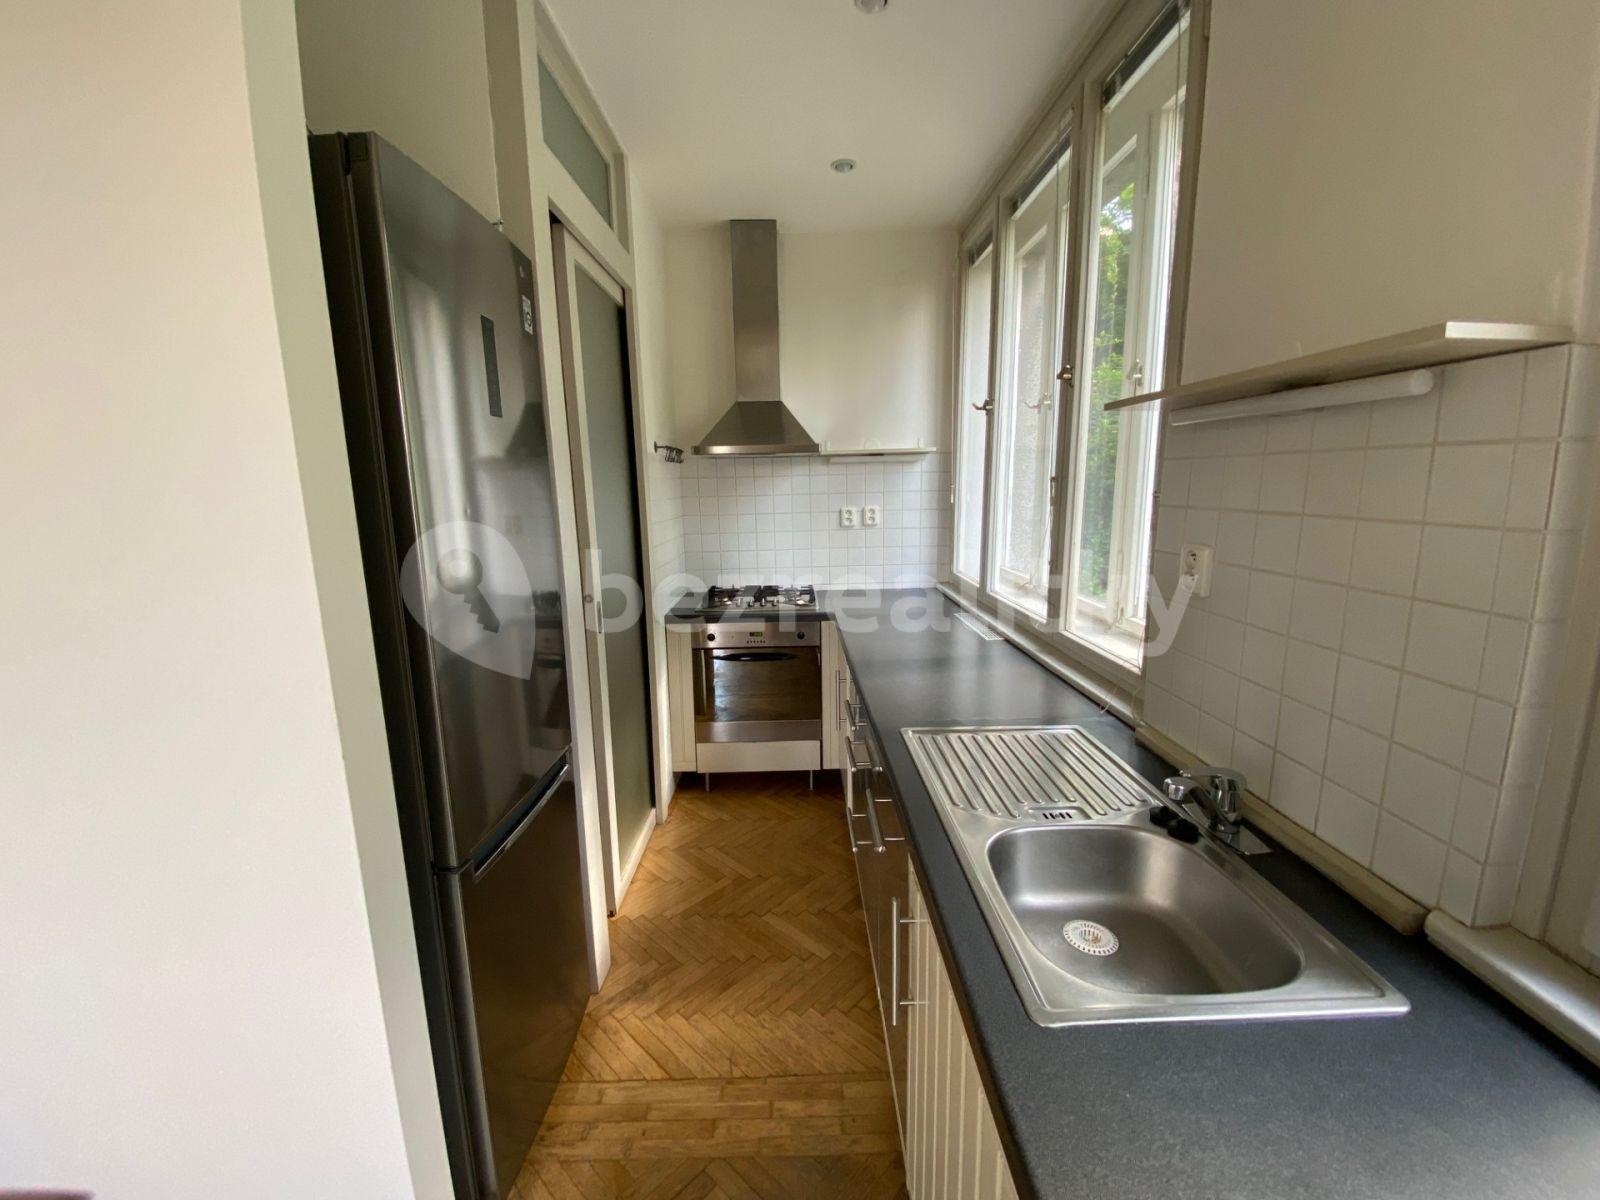 2 bedroom with open-plan kitchen flat to rent, 80 m², Na Provaznici, Prague, Prague